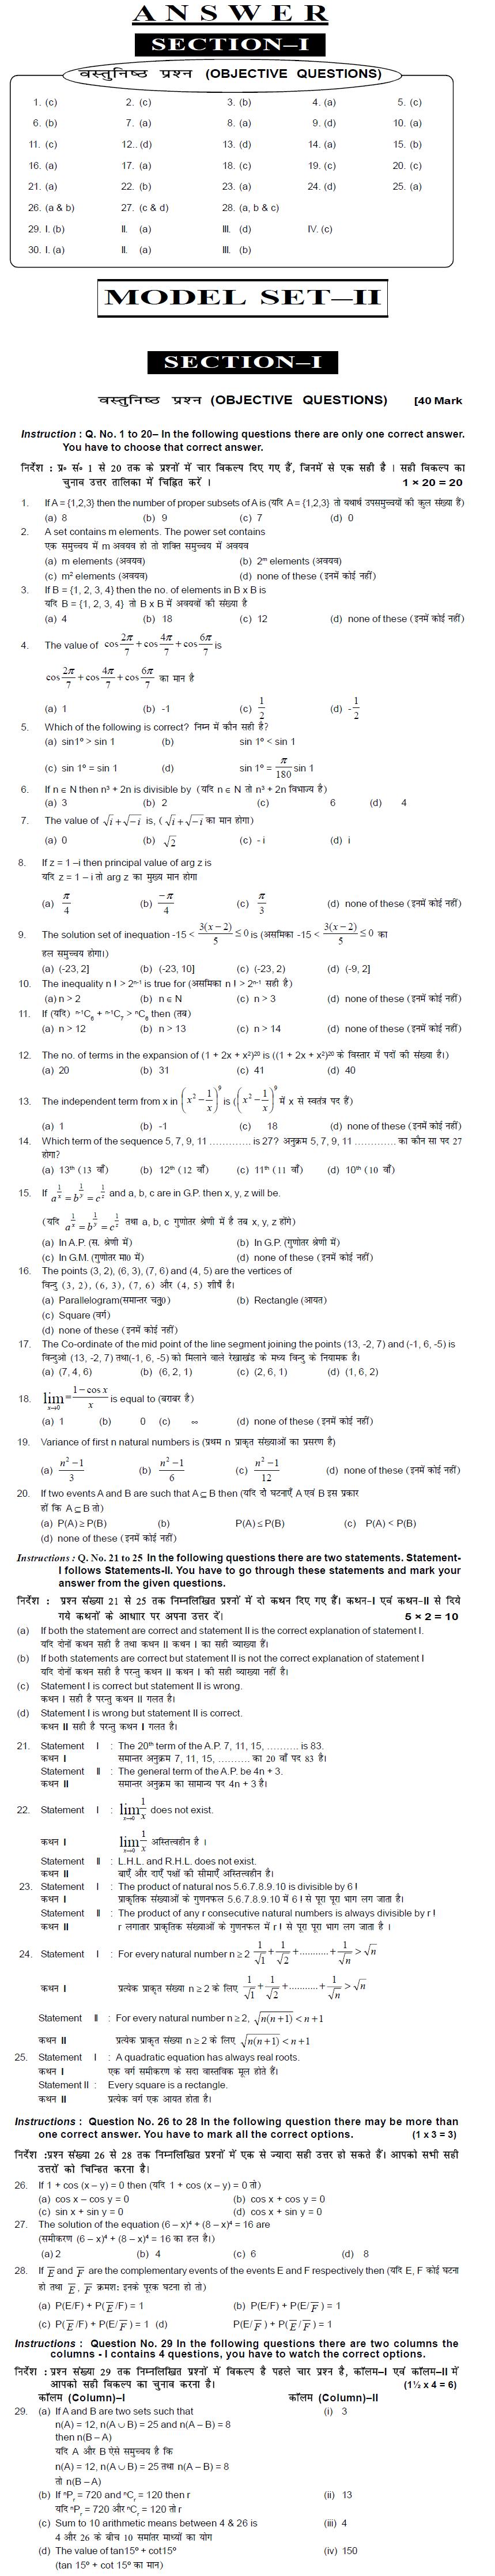 Bihar Board Class XI Science Model Question Papers - Mathematics